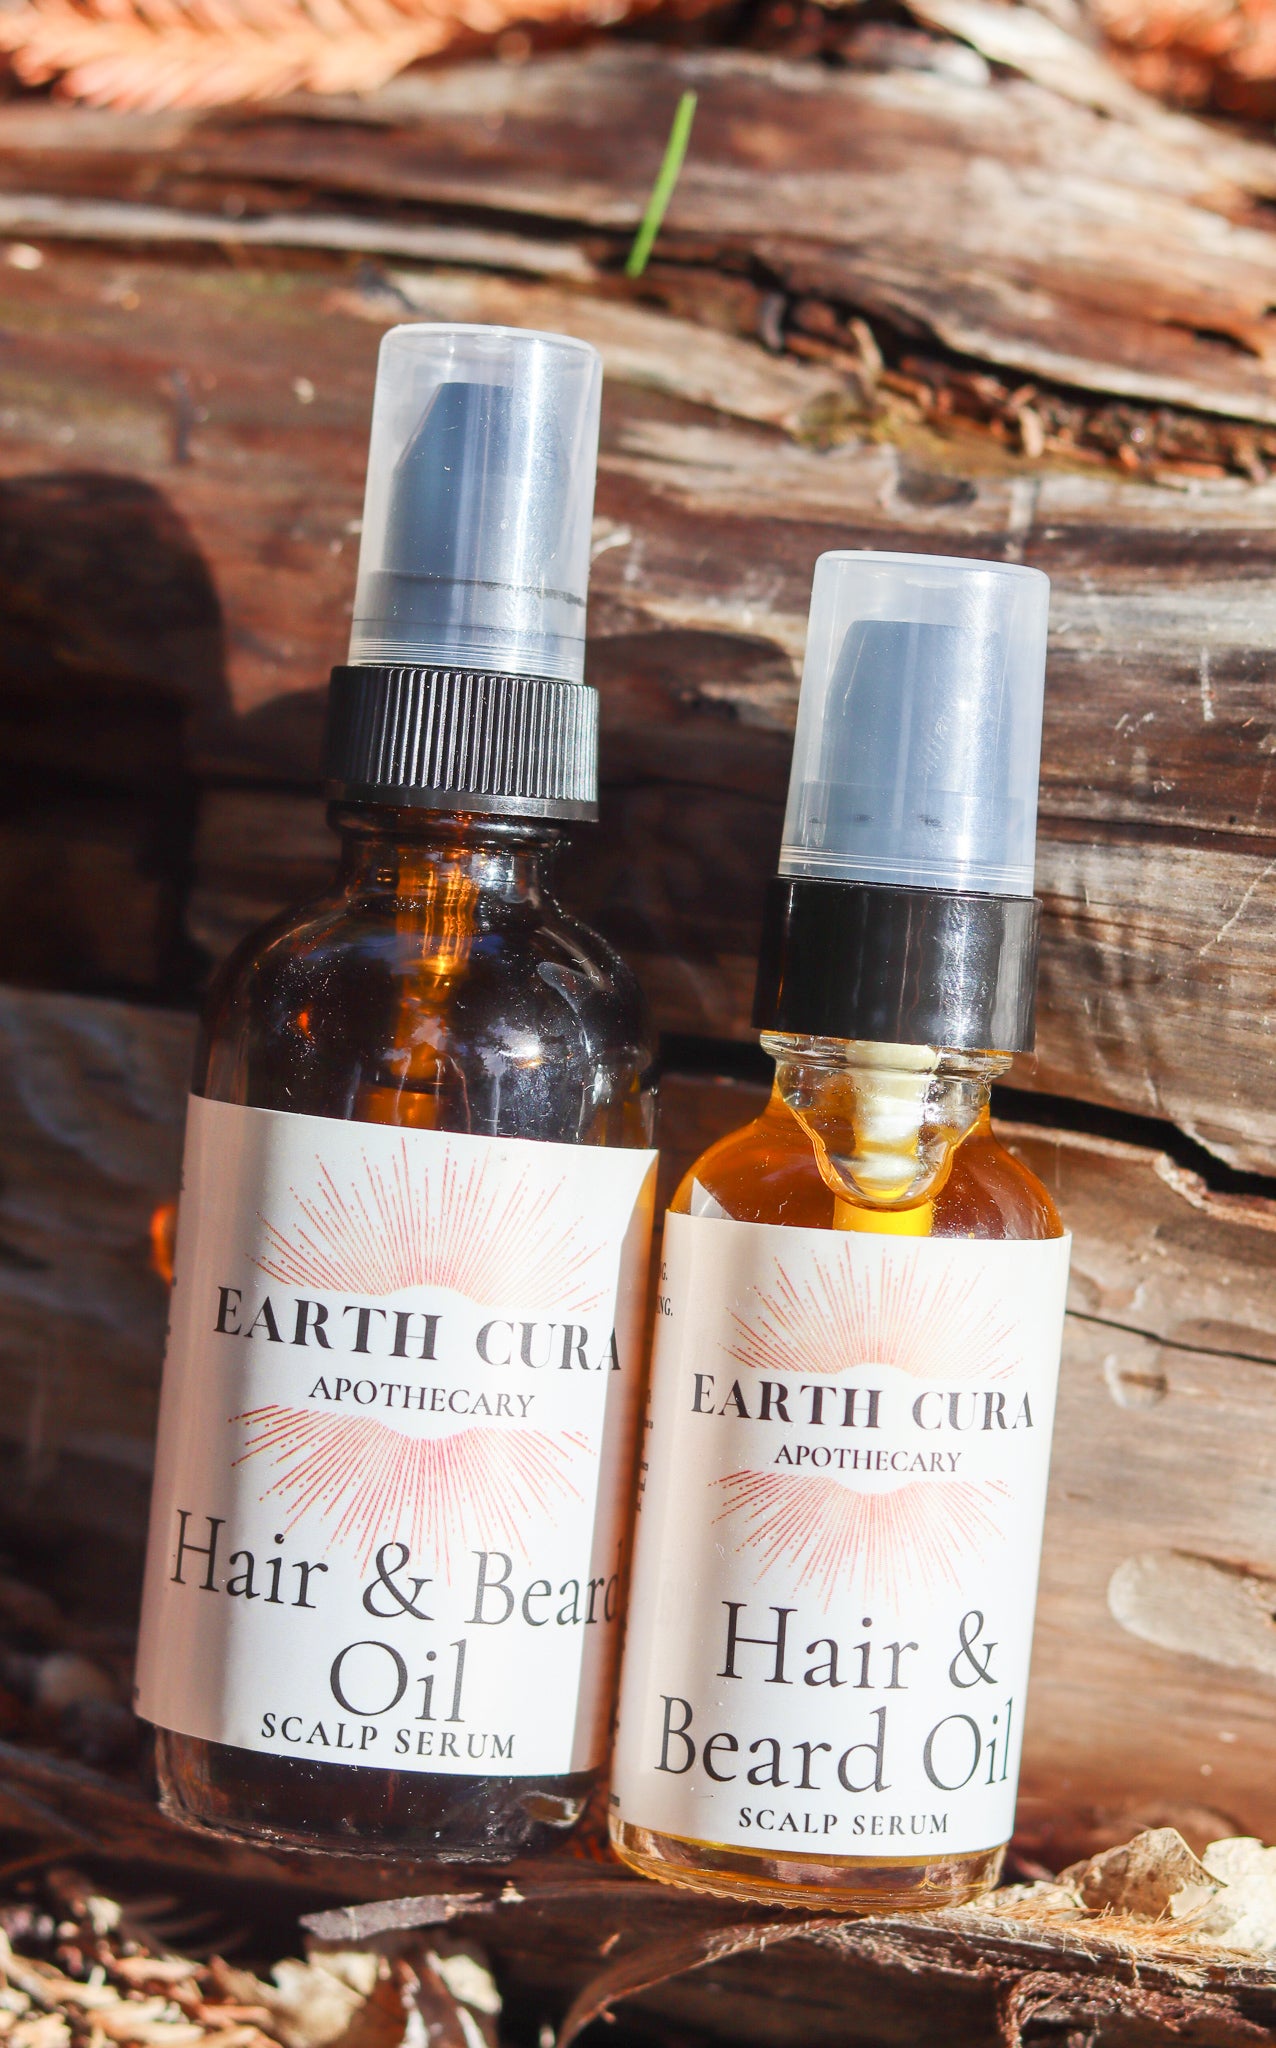 HAIR & BEARD SERUM - Rosemary & Fenugreek Botanical Oils - Scalp Serum -Hair conditioner, growth and dandruff treatment oil